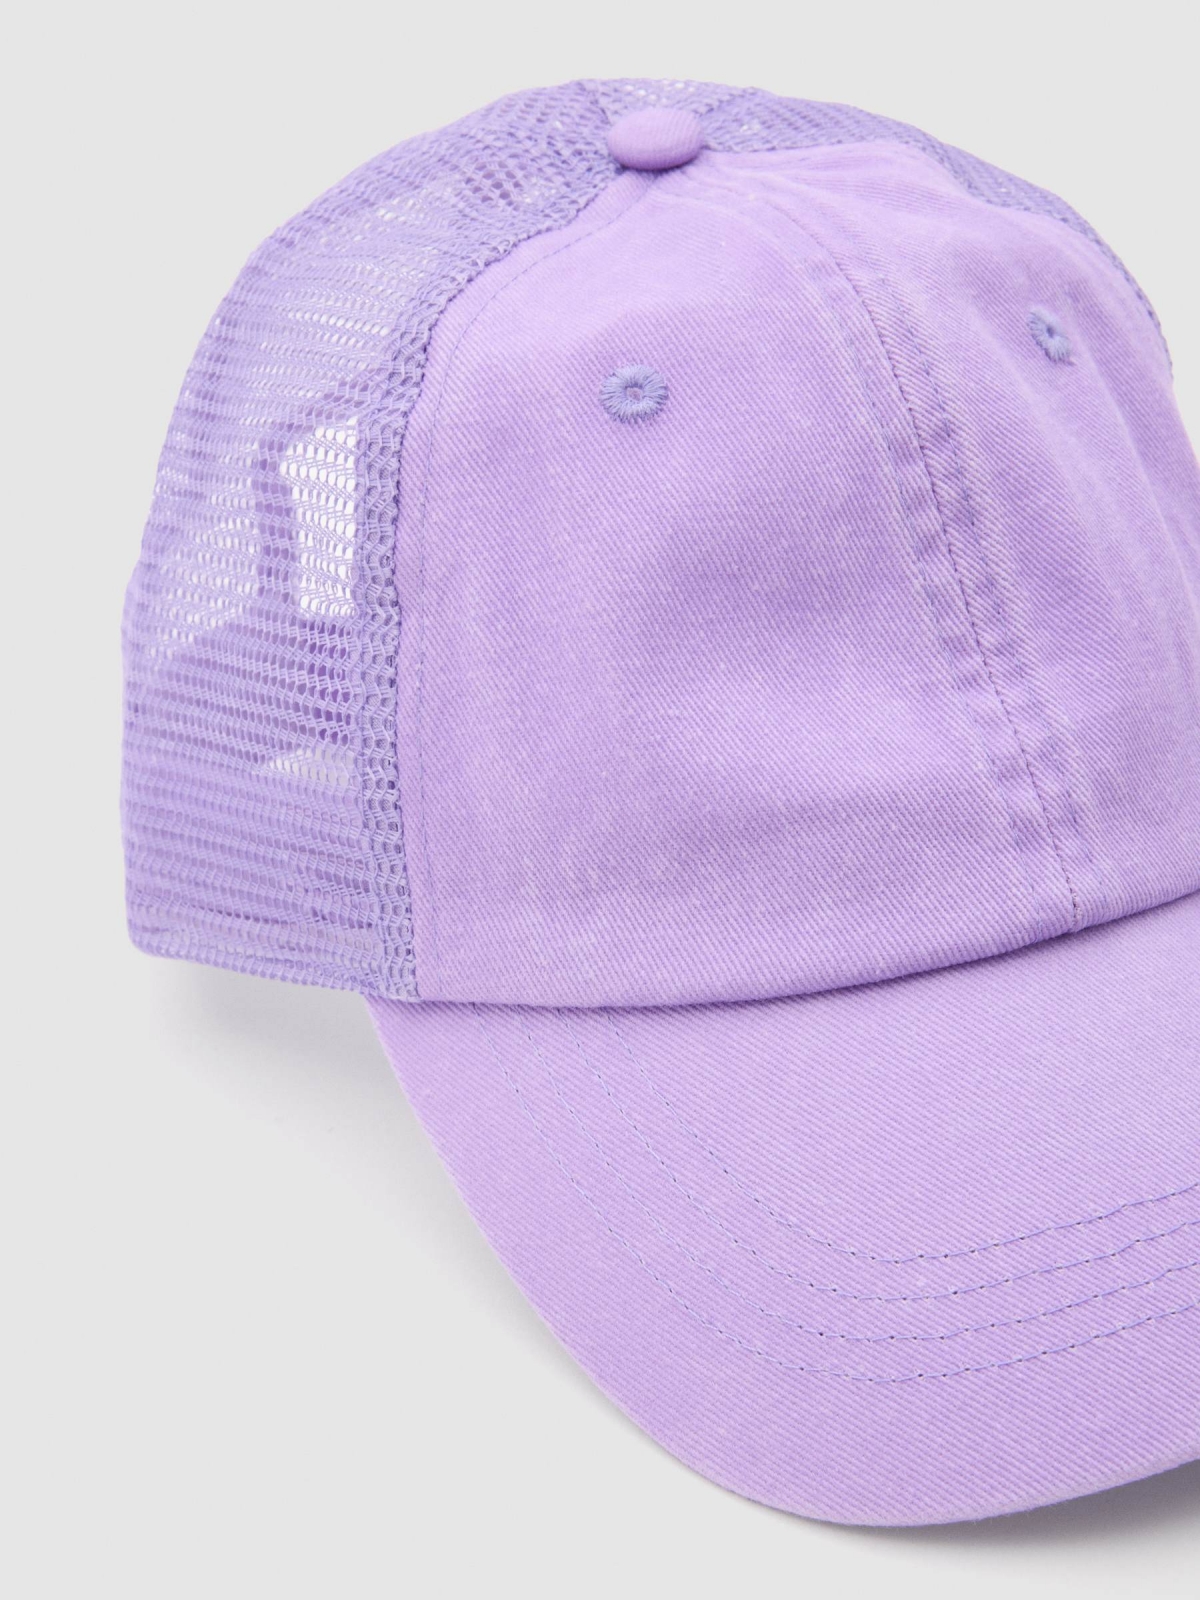 Lilac trucker cap purple detail view